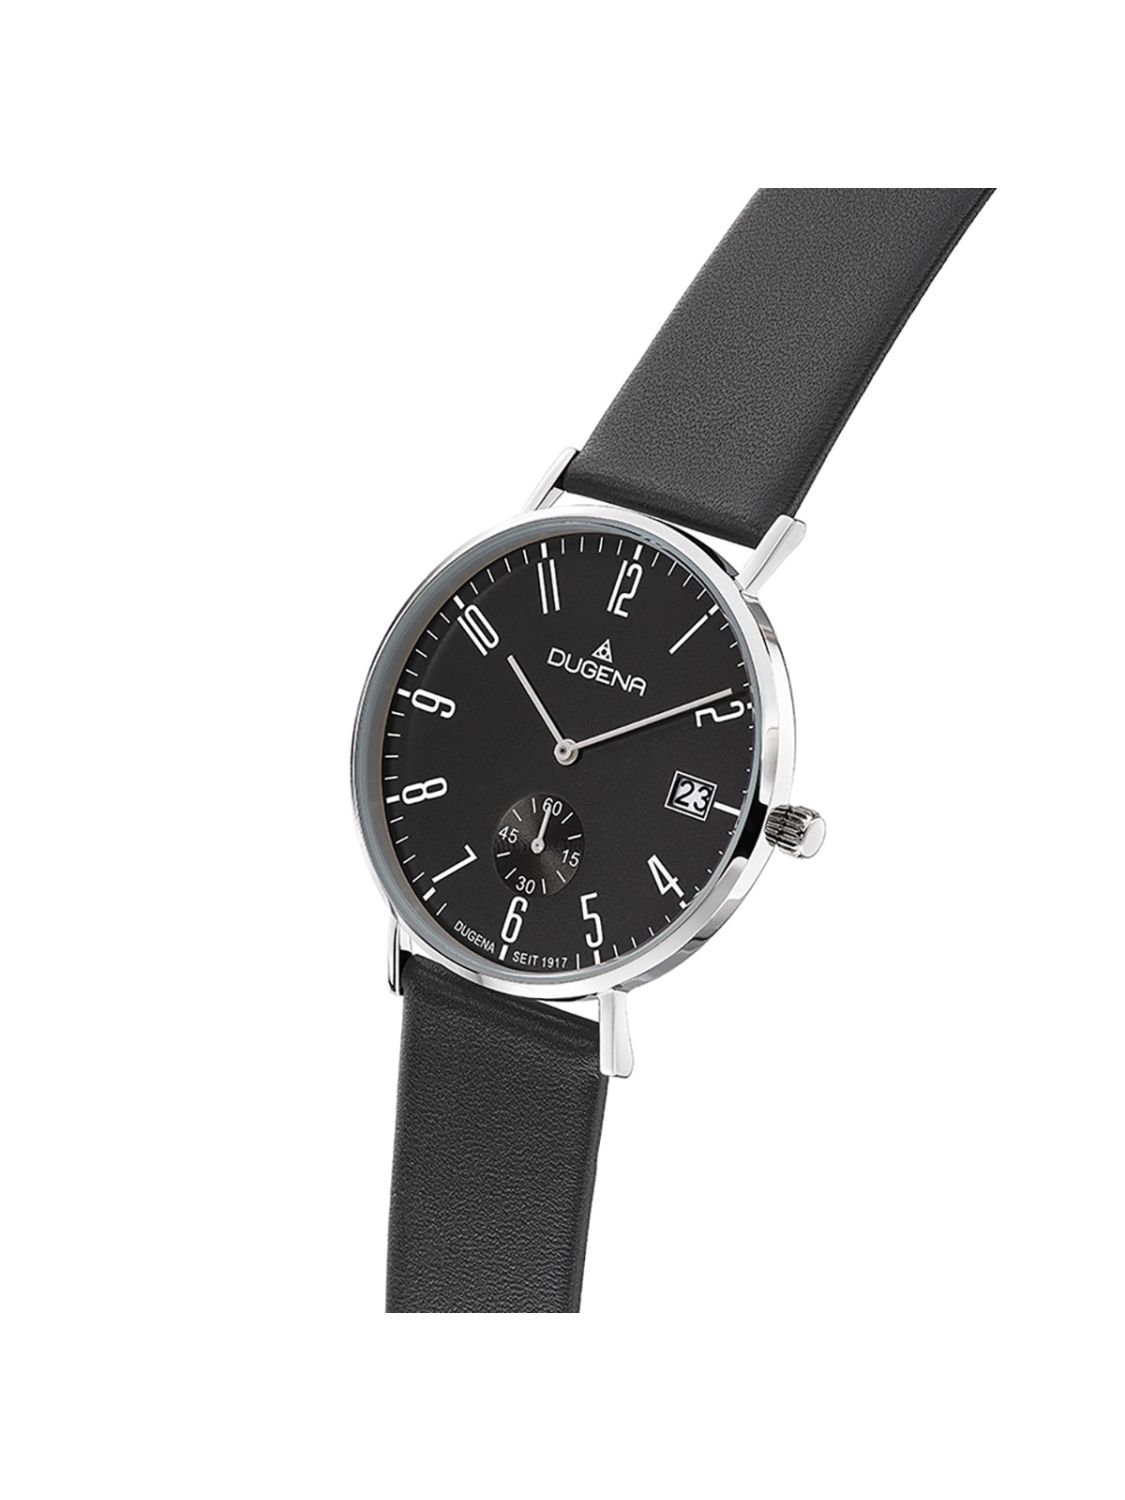 Dugena Men\'s Quartz Watch Mondo Black Leather Strap 4460666-1 • uhrcenter